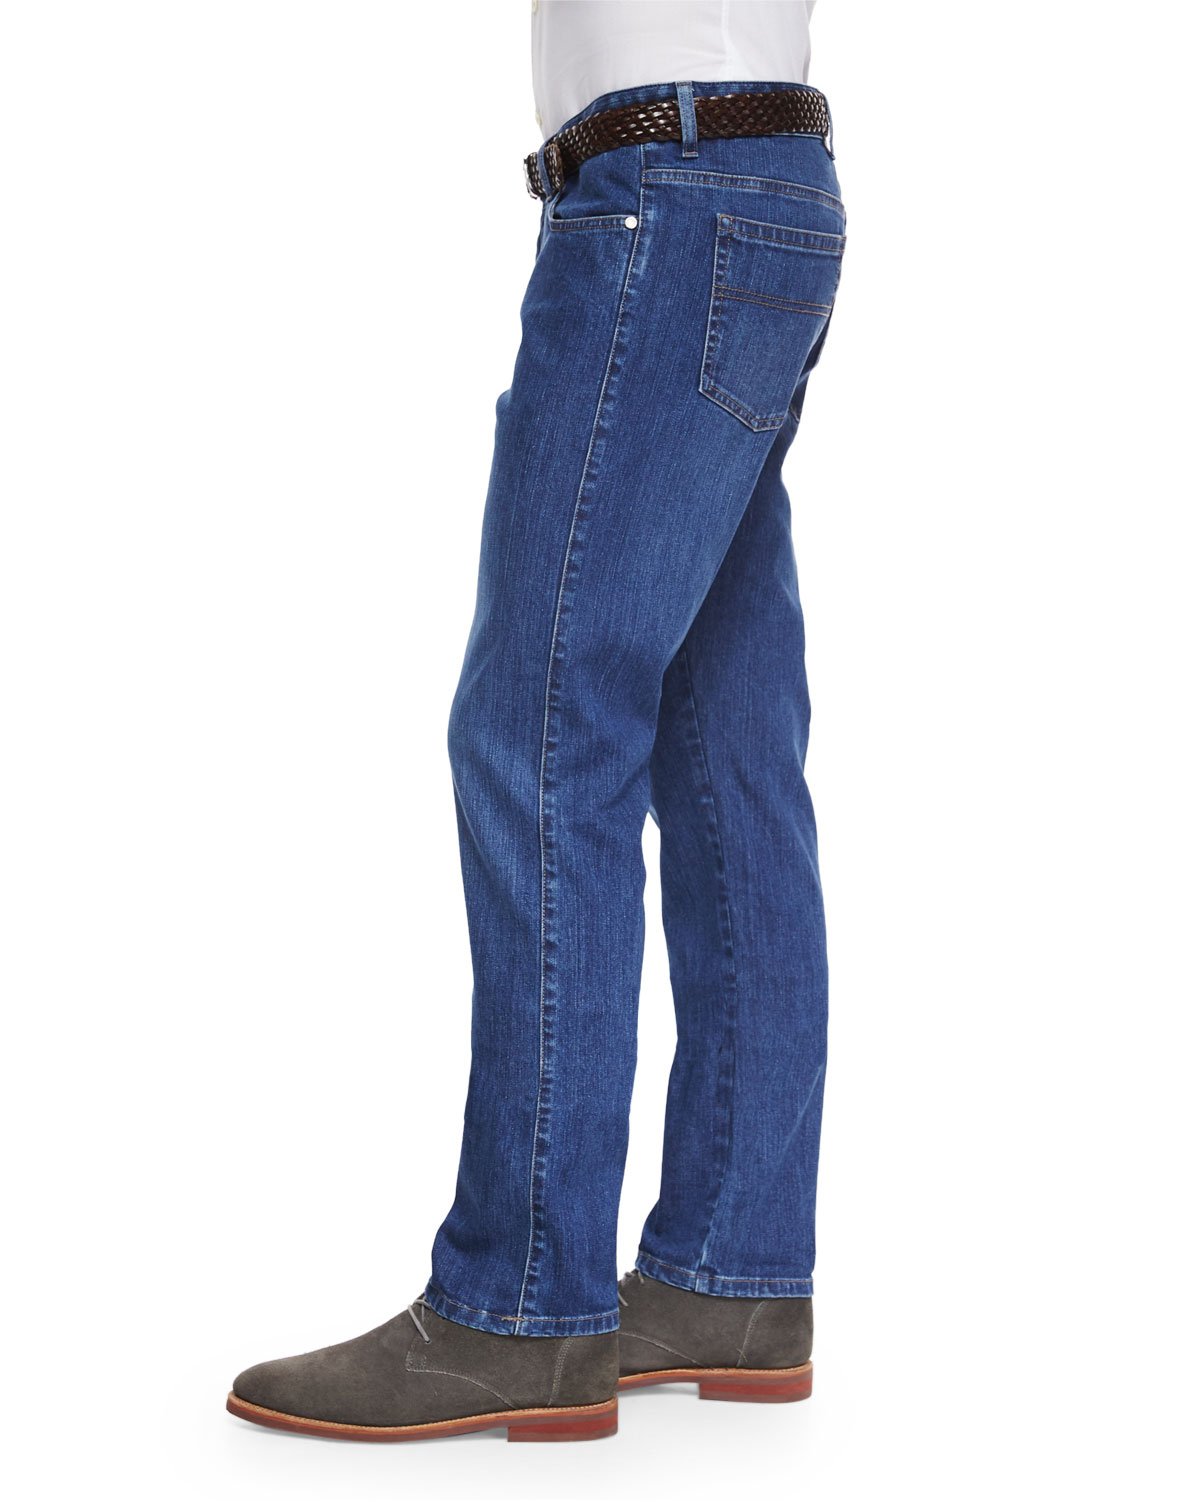 Lyst - Ermenegildo Zegna Slim Fit Stretch-Denim Jeans in Blue for Men